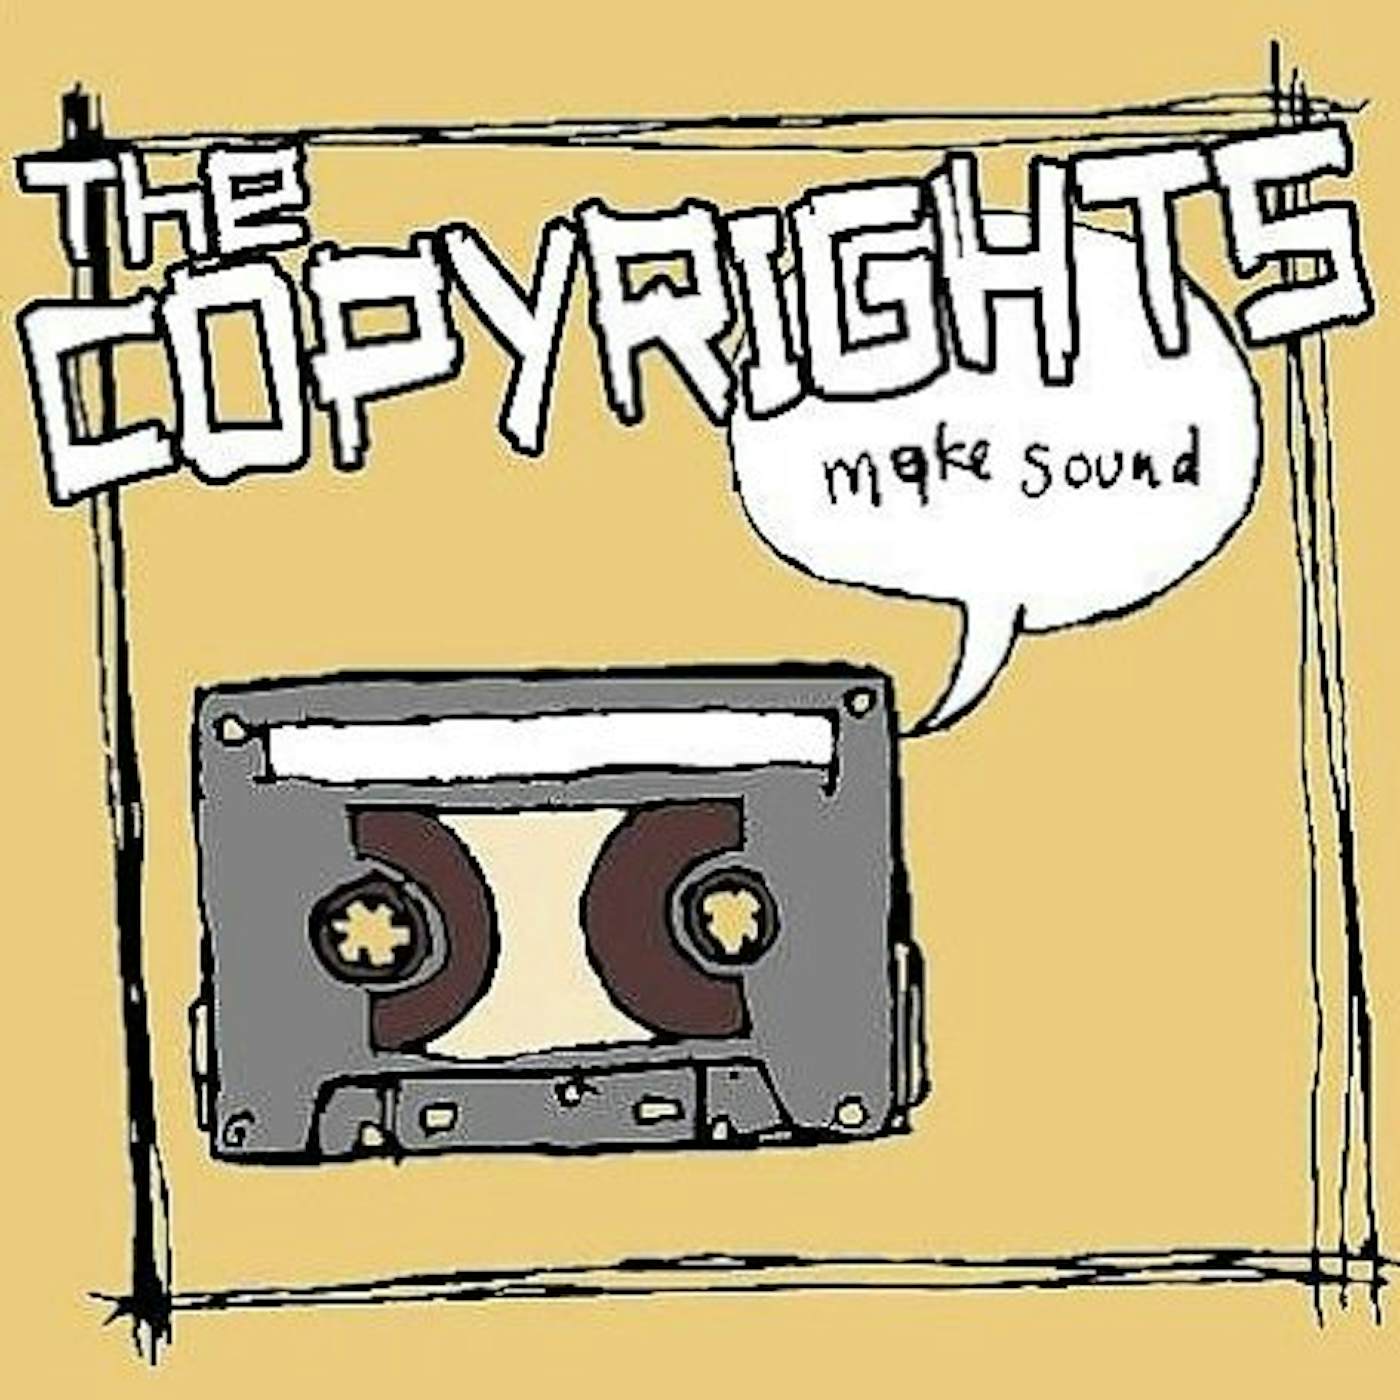 The Copyrights MAKE SOUND Vinyl Record